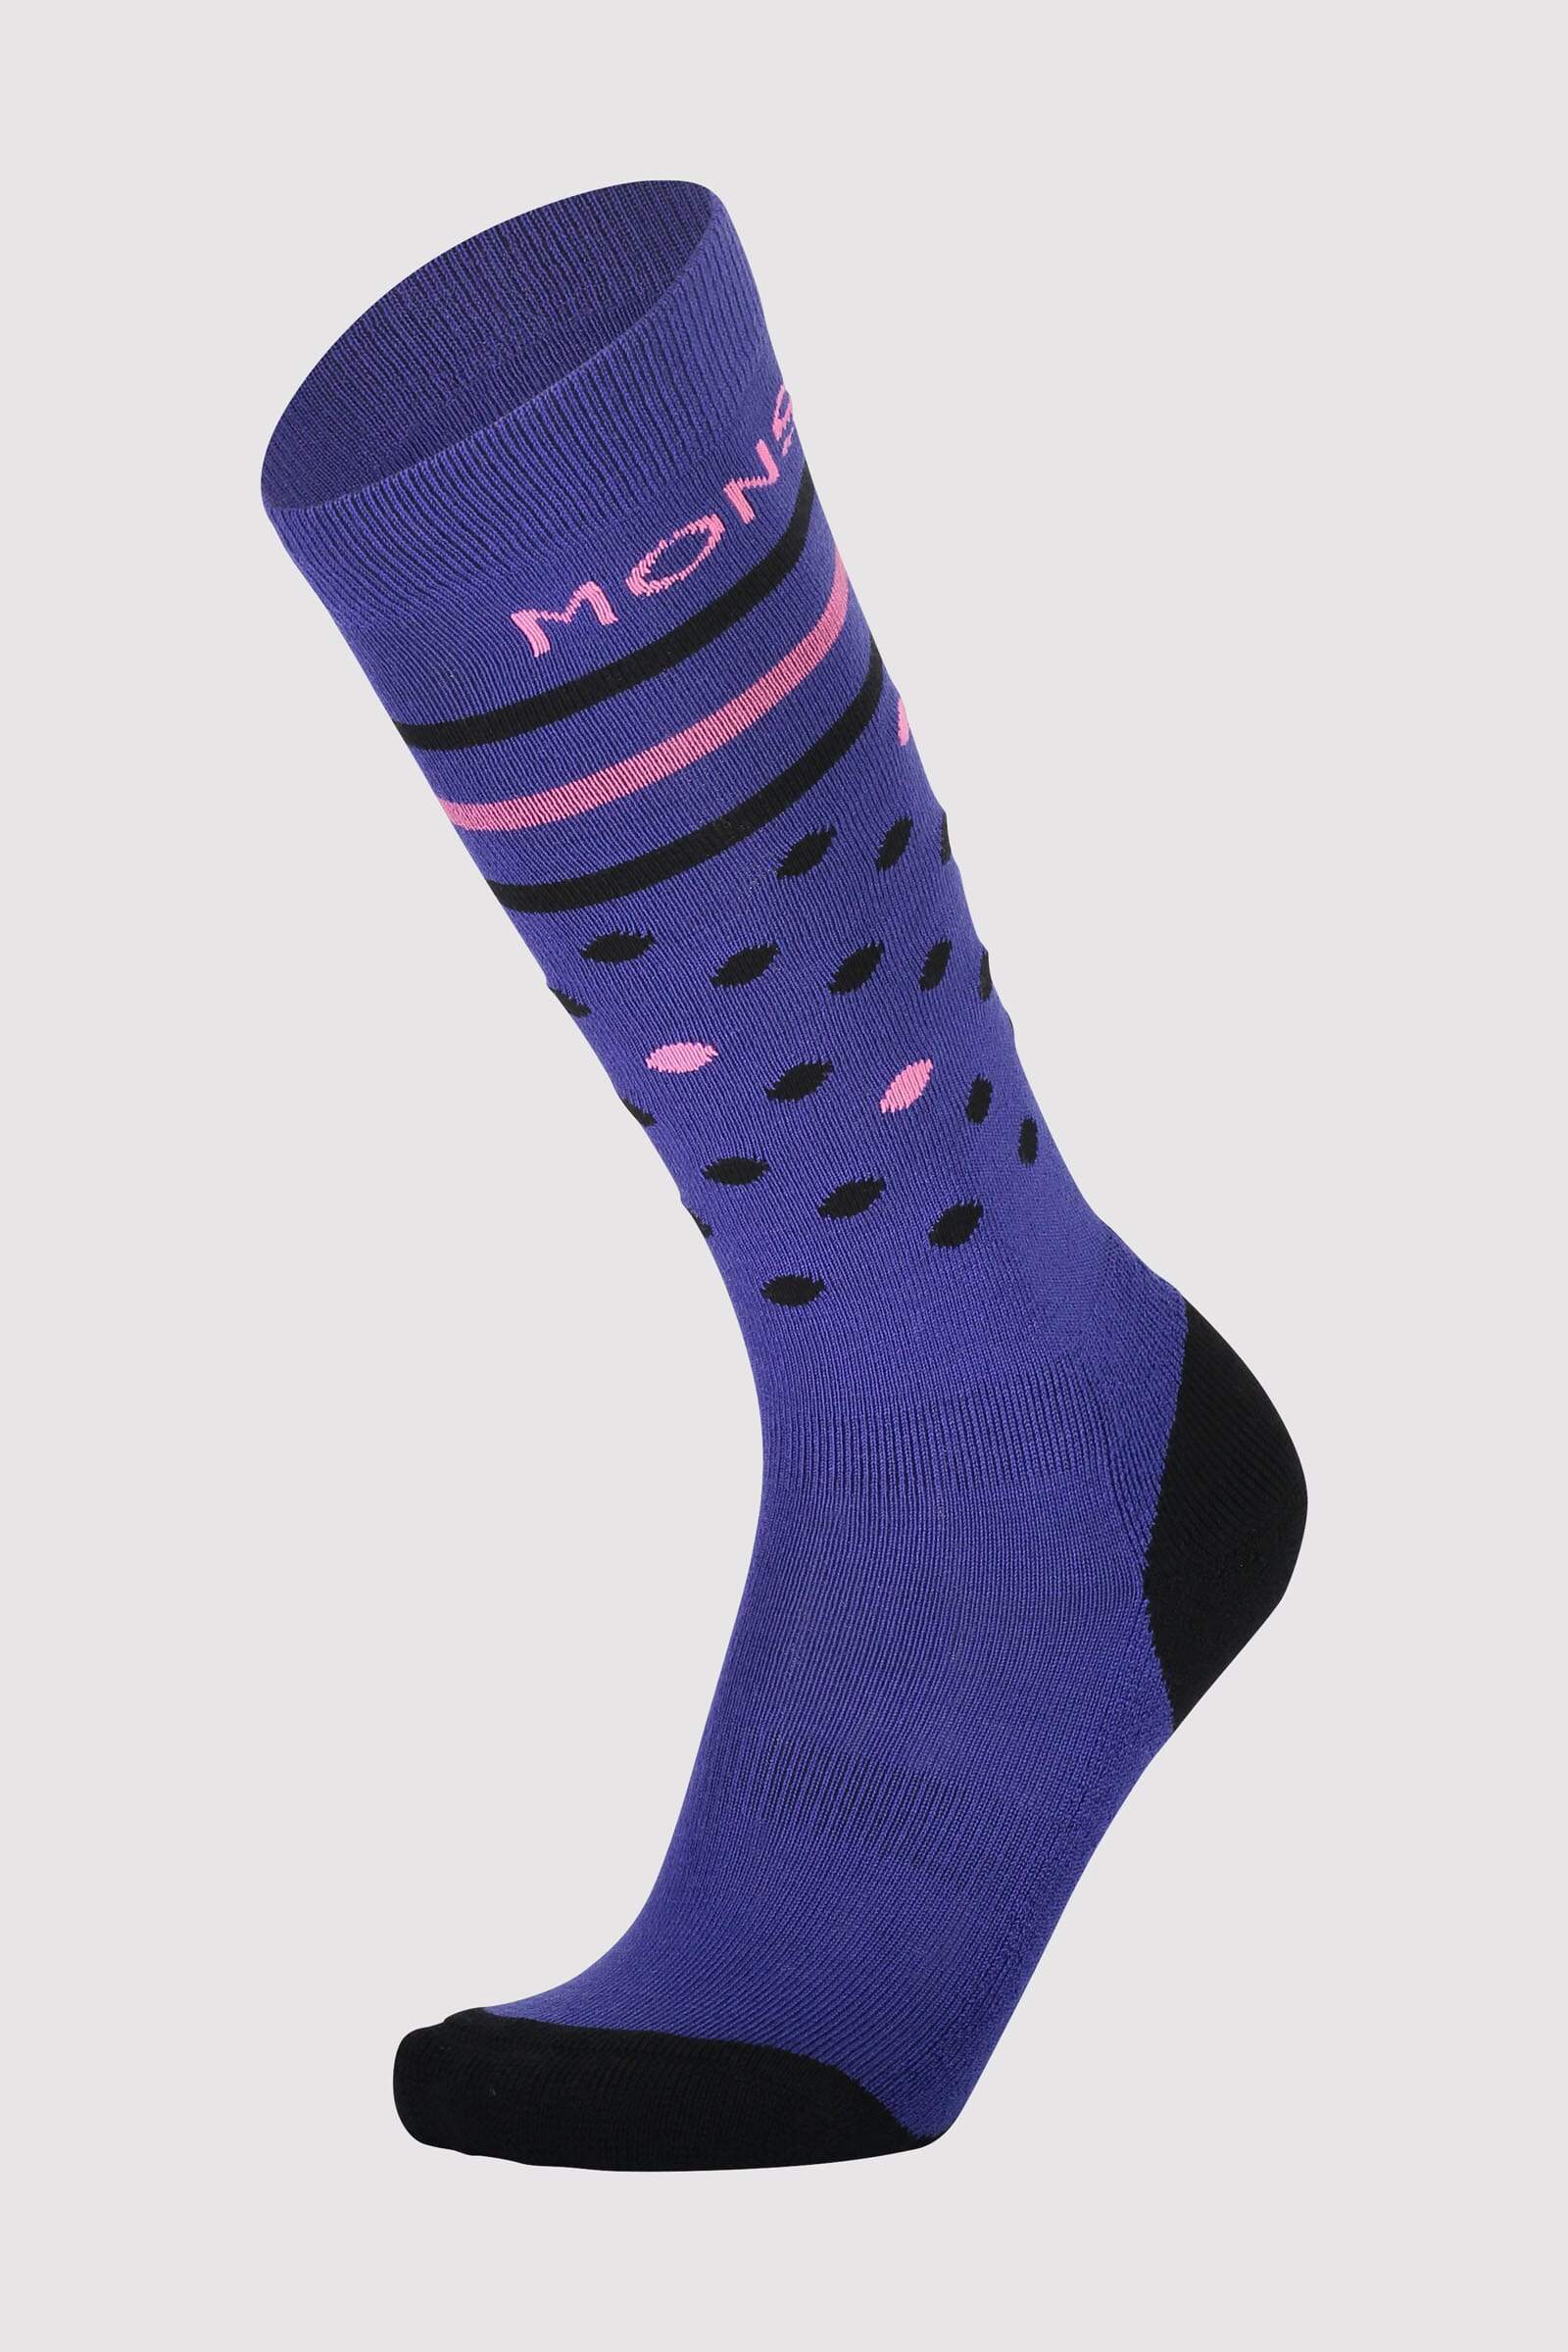 Mons Royale Women's Lift Access Sock - Merino Wool, Ultra Blue / Pink / M (38-40)